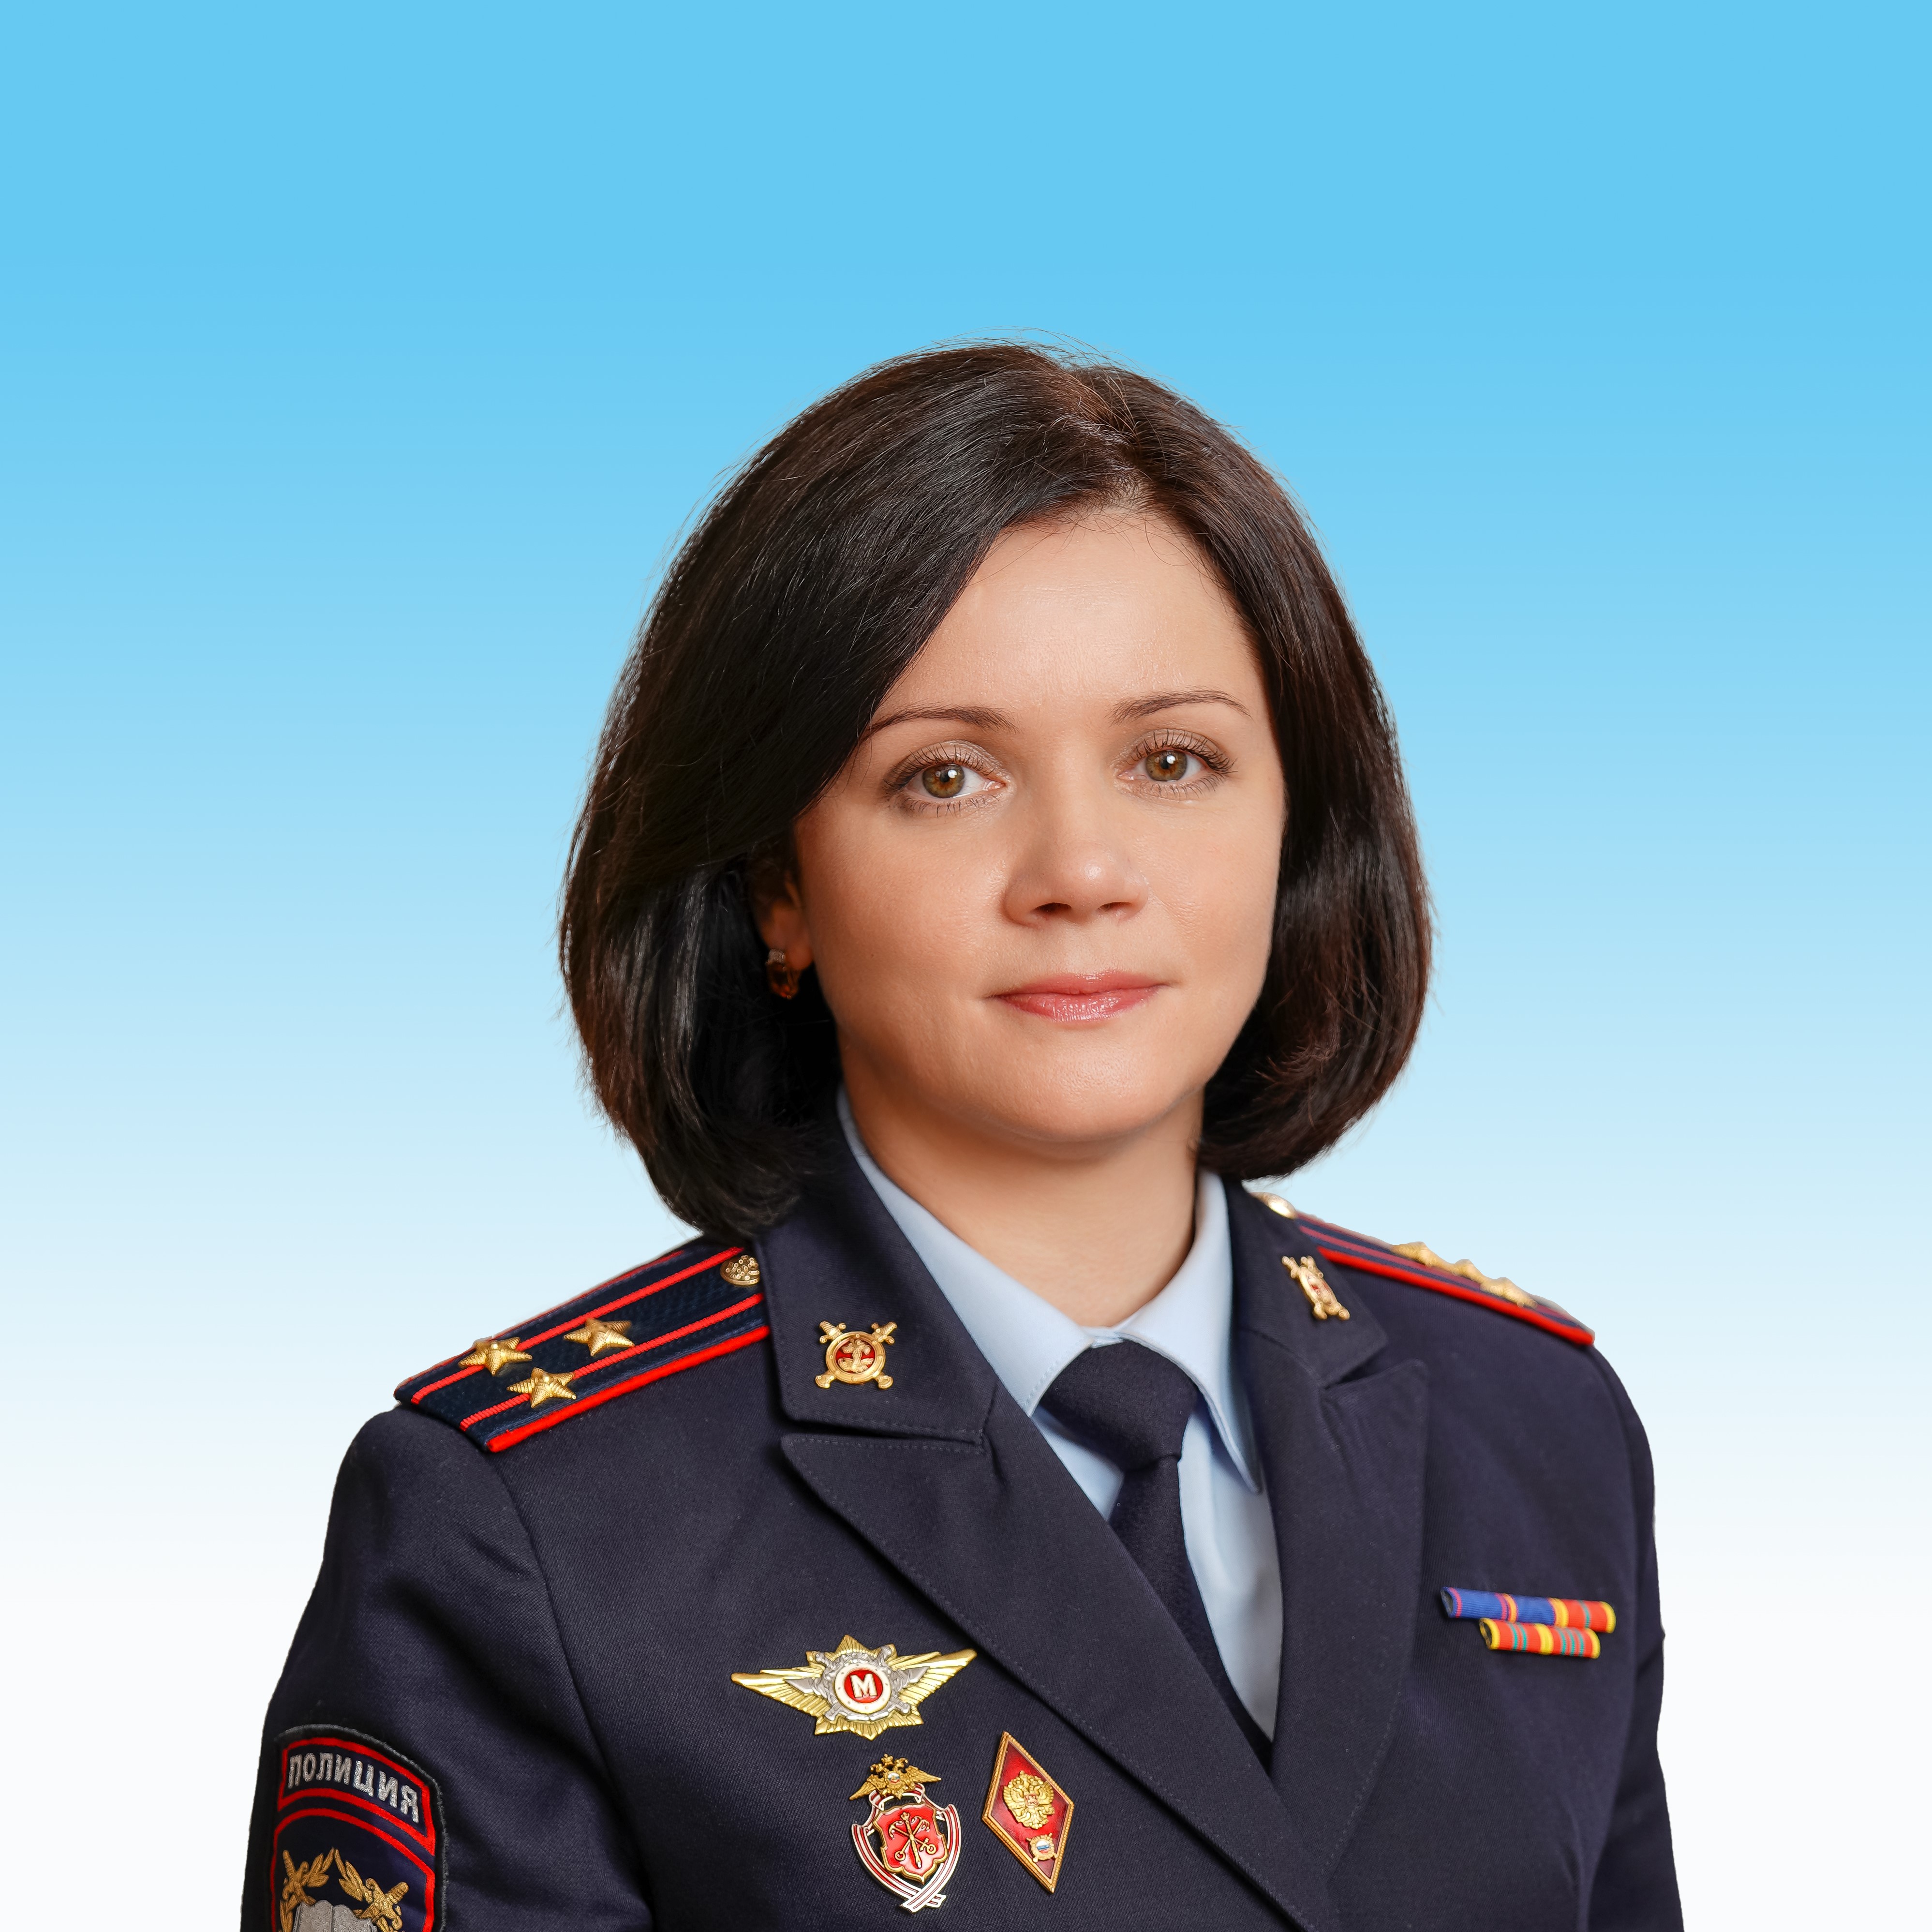             Миронкина Оксана Николаевна
    